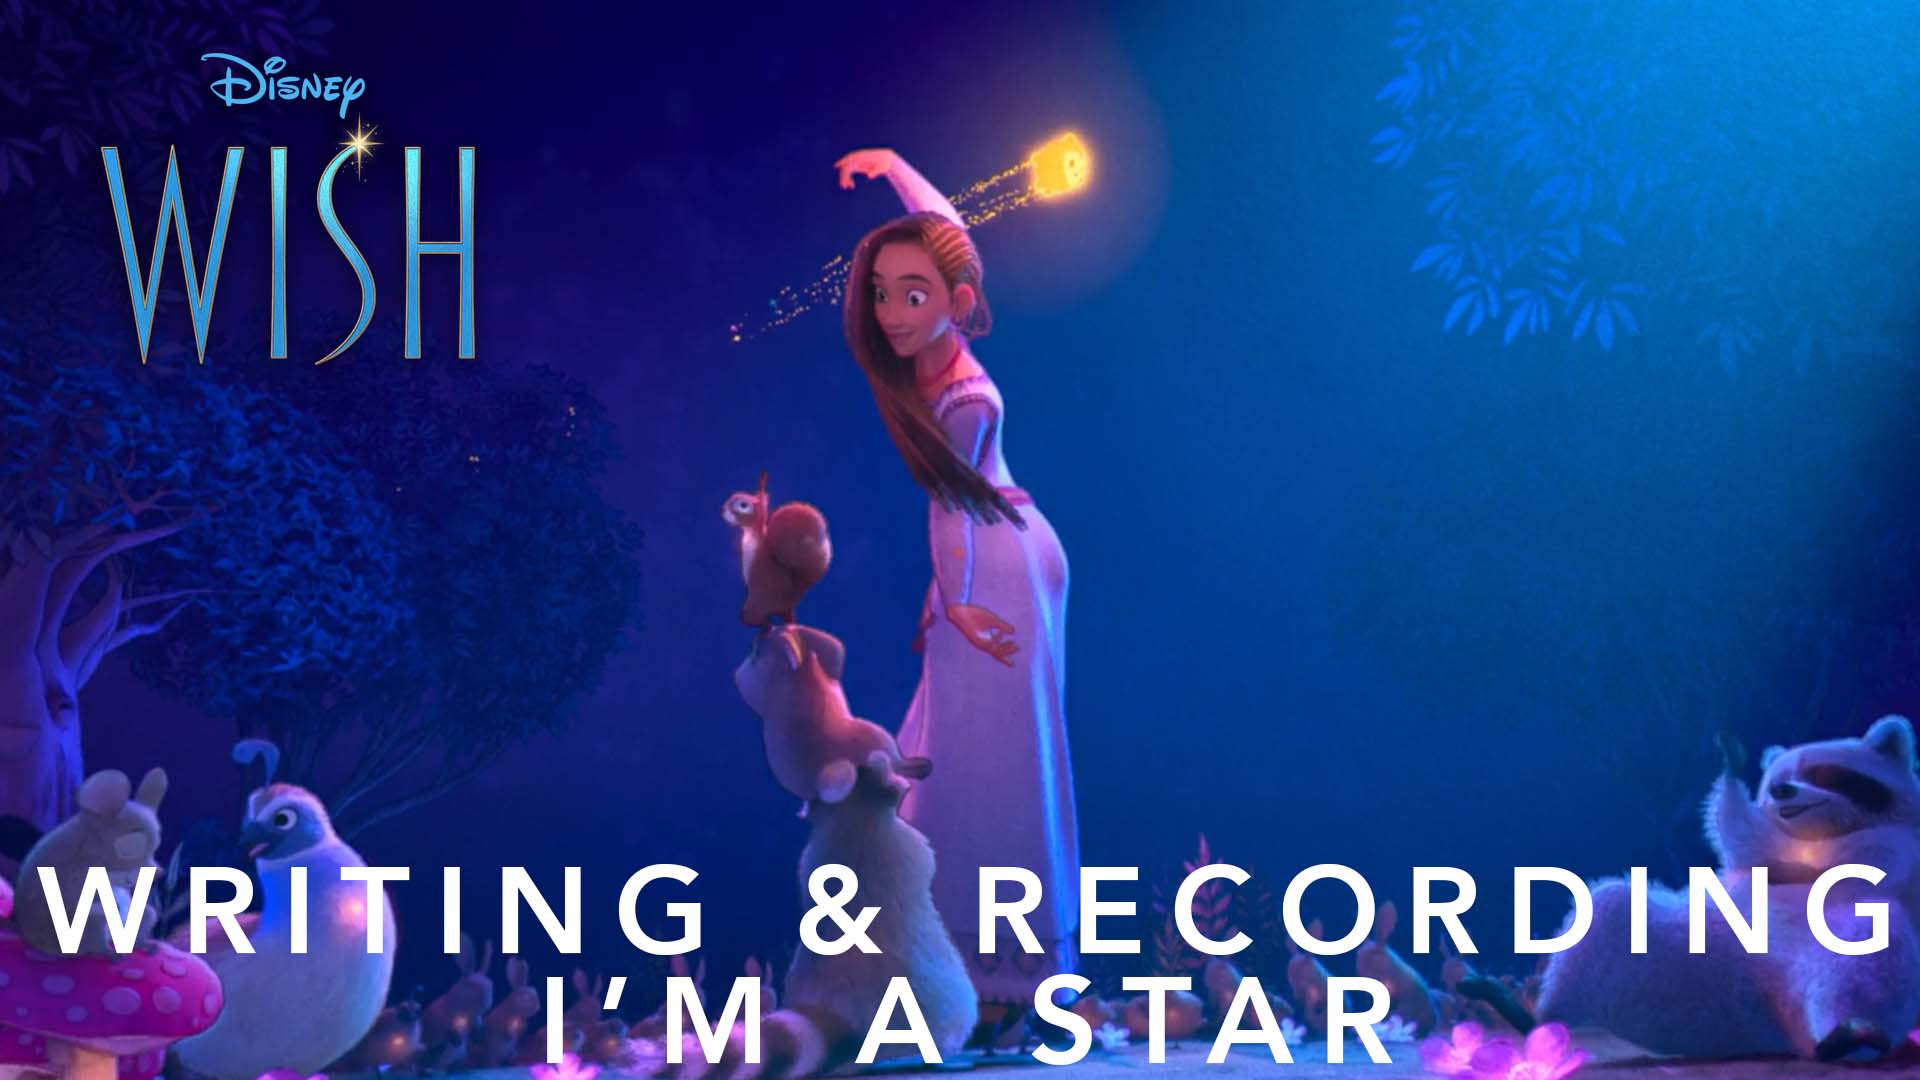 Disney's Wish, Writing & Recording I'm A Star